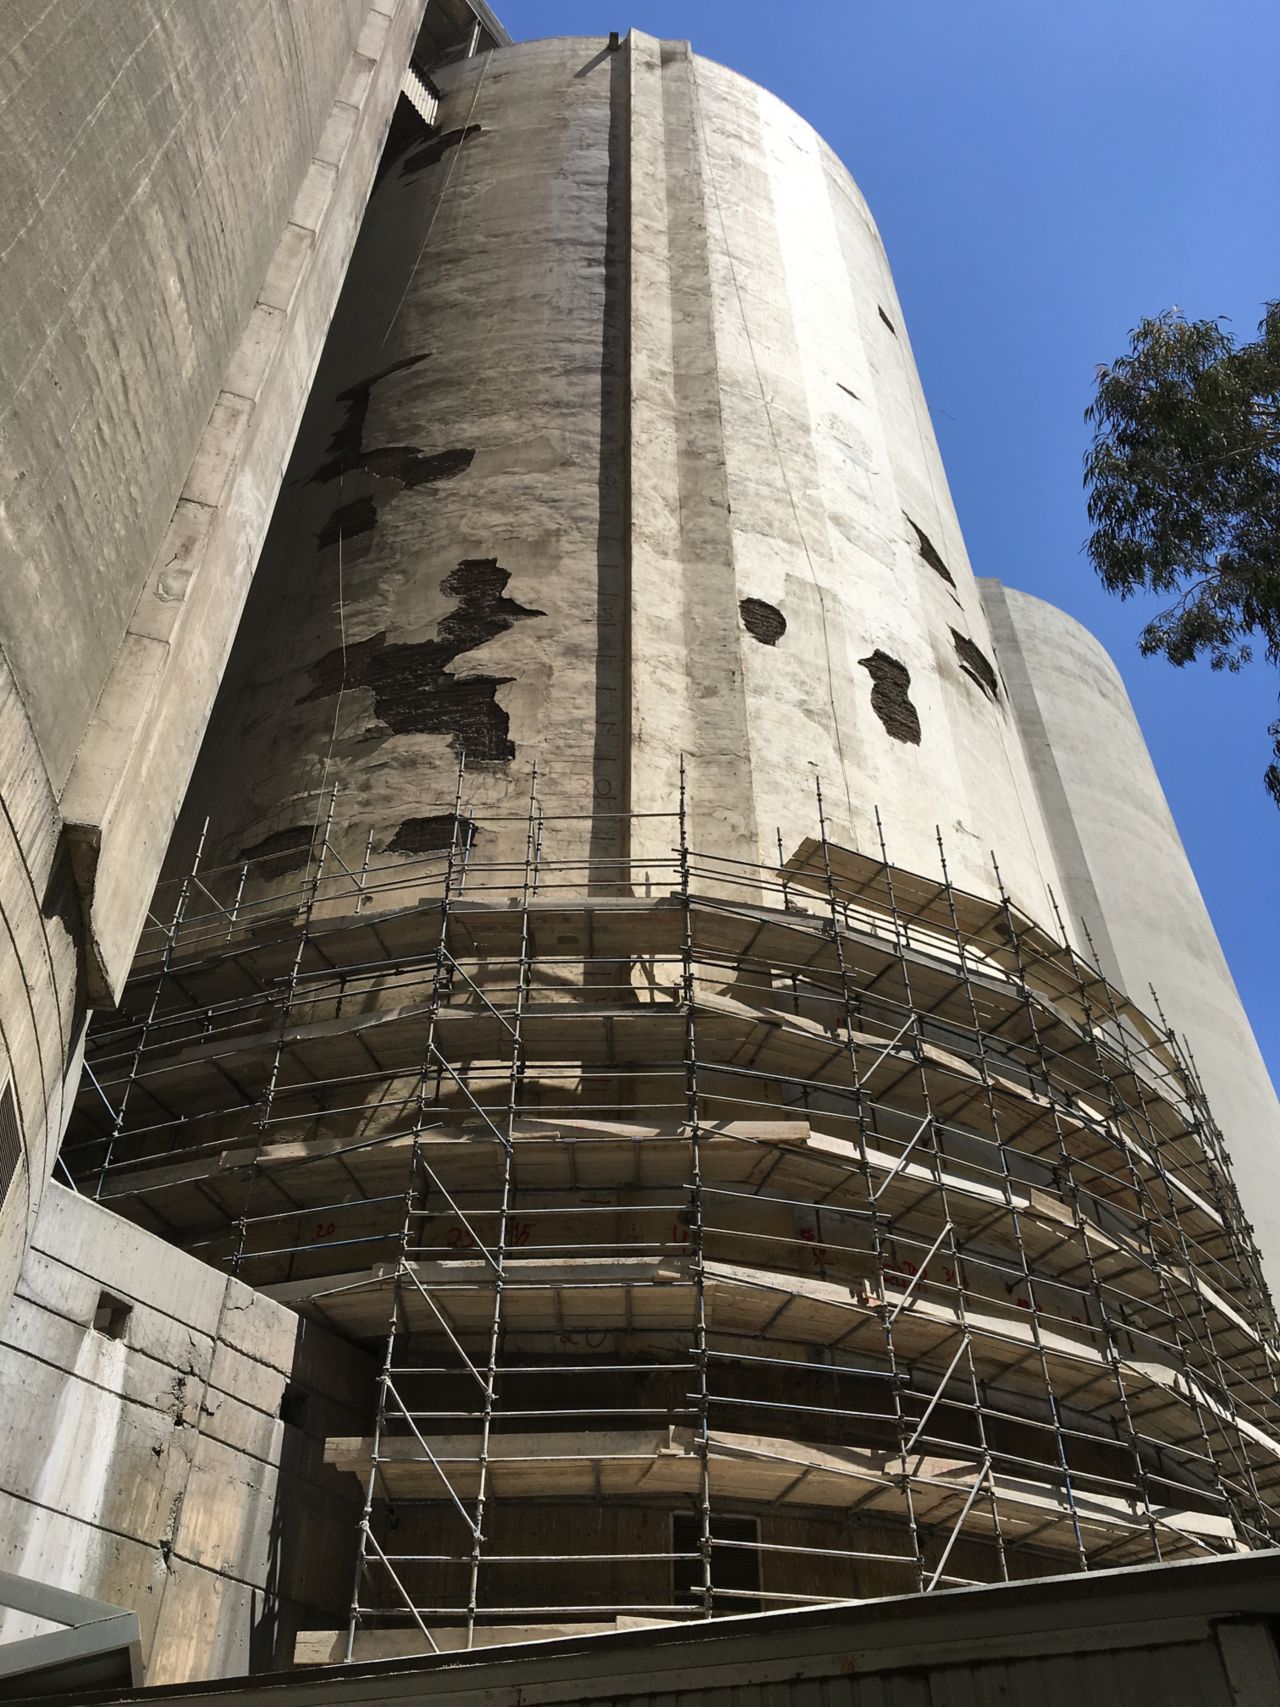 Concrete silo before concrete repair mortar renovation